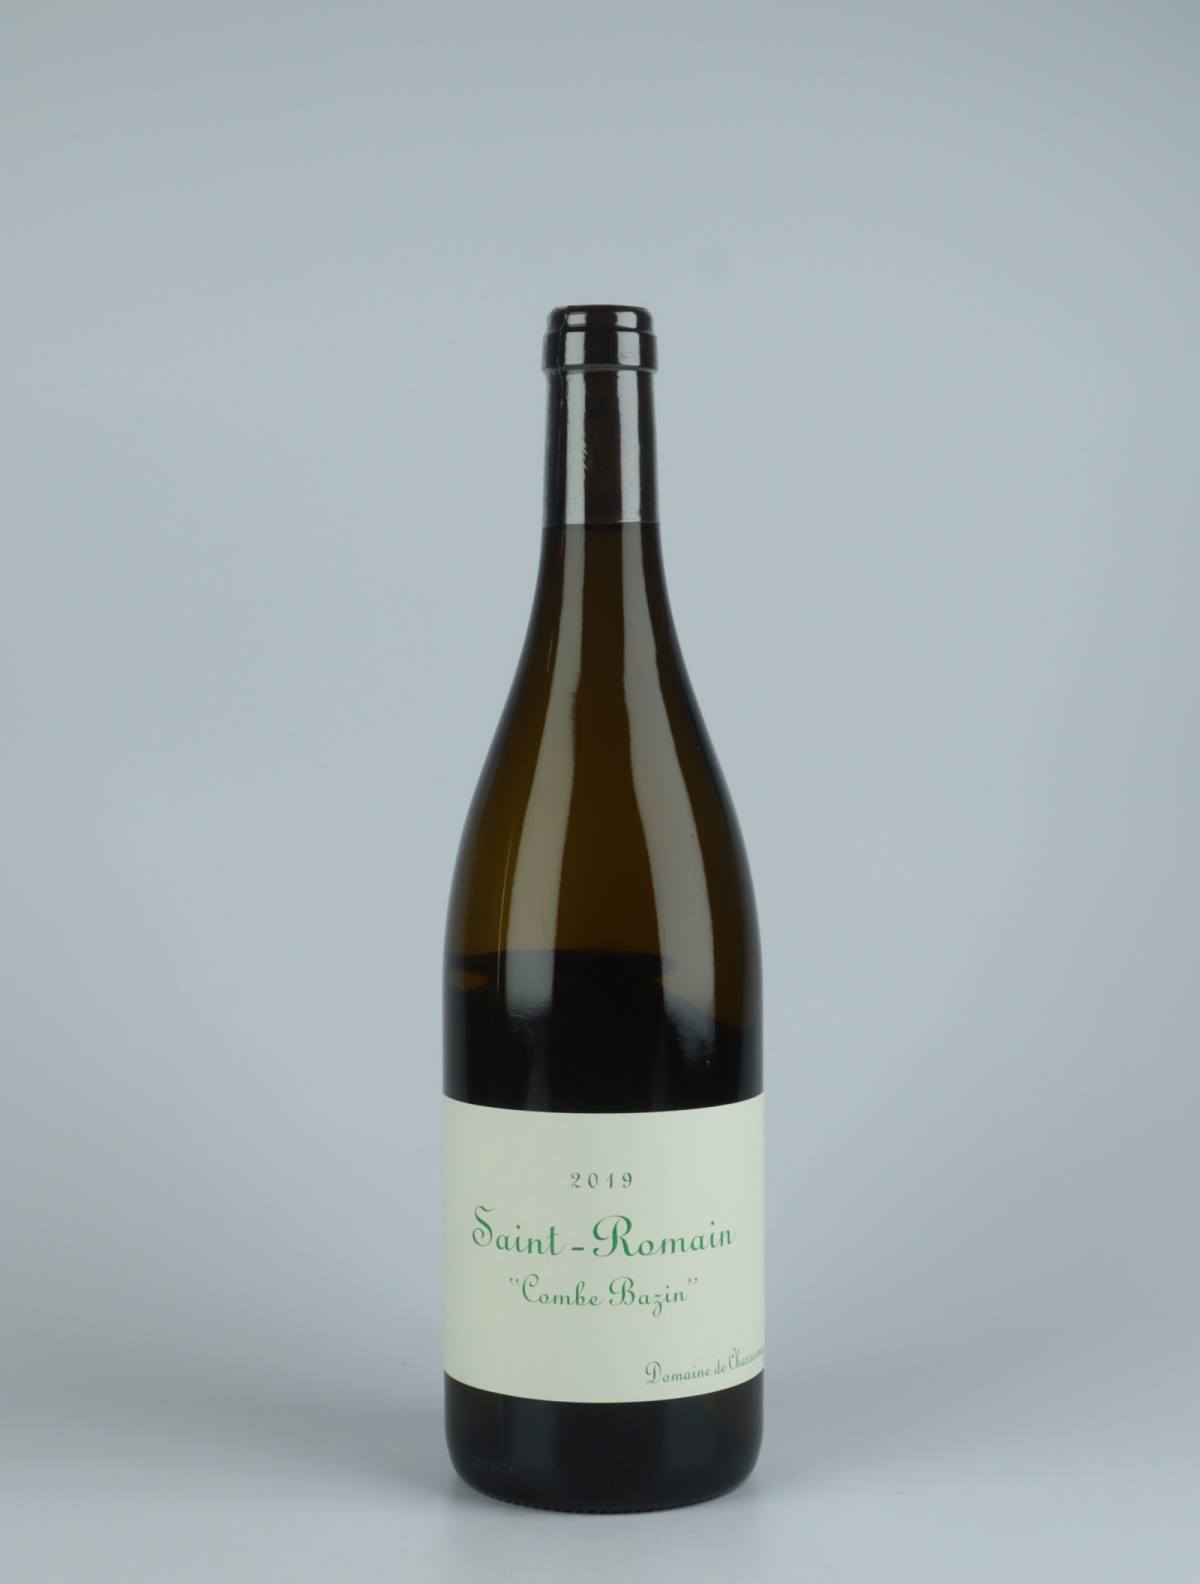 A bottle 2019 Saint Romain Blanc - Combe Bazin - Qvevris White wine from , Burgundy in France